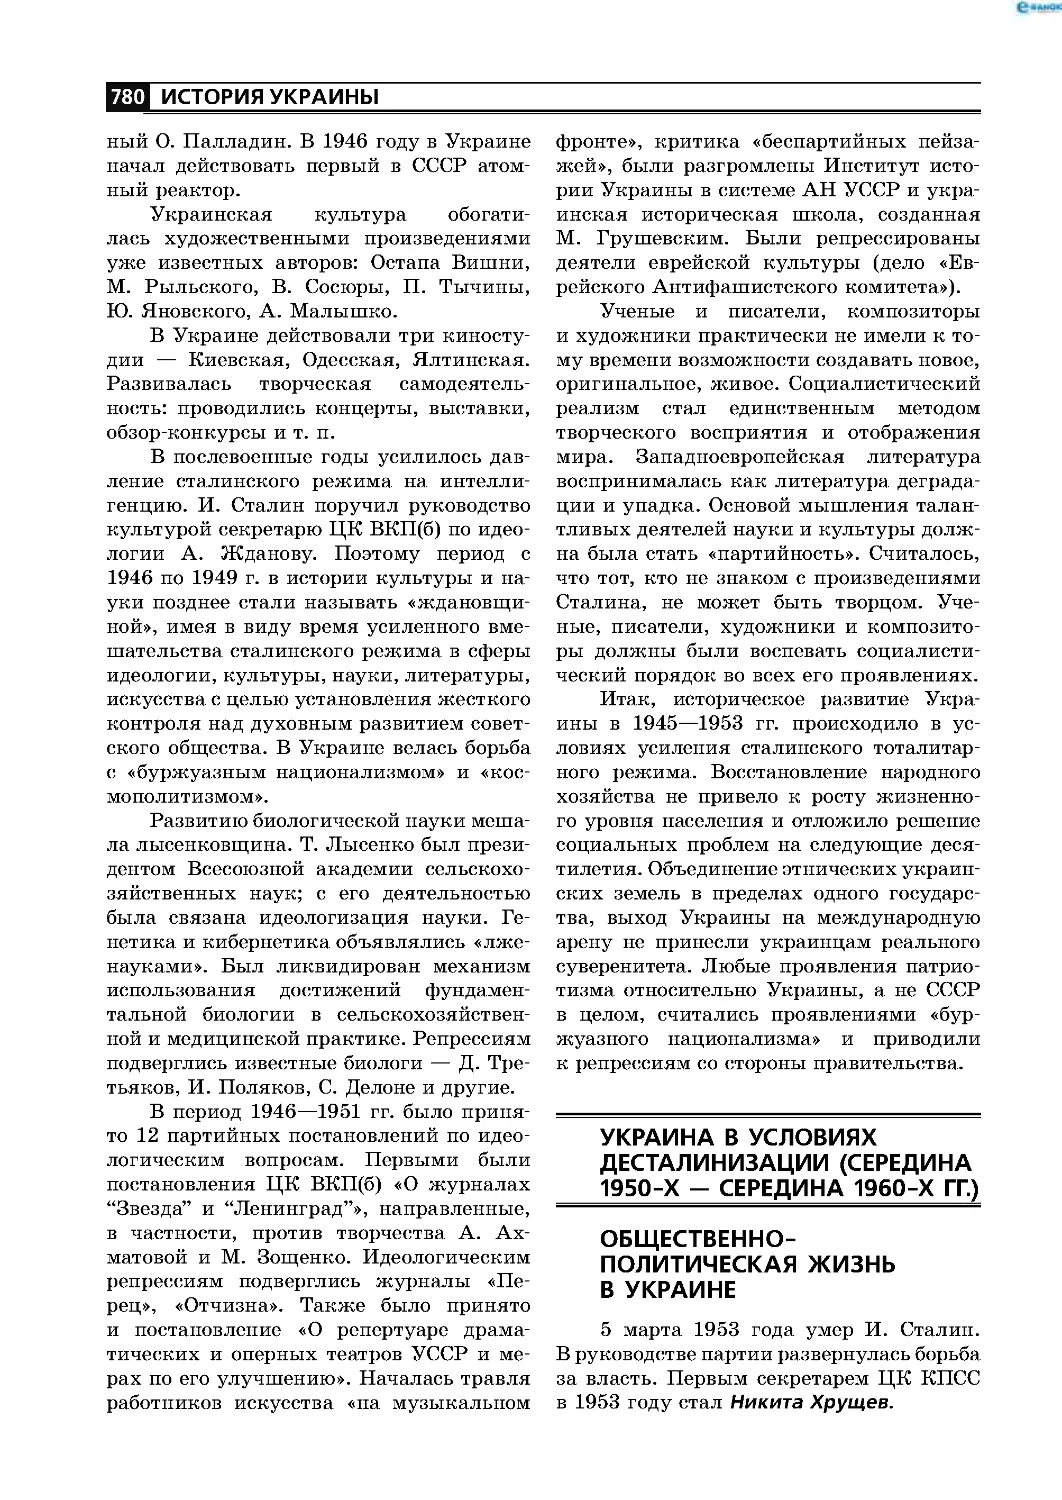 Украина в условиях десталинизации (середина 1950-х — середина 1960-х гг )